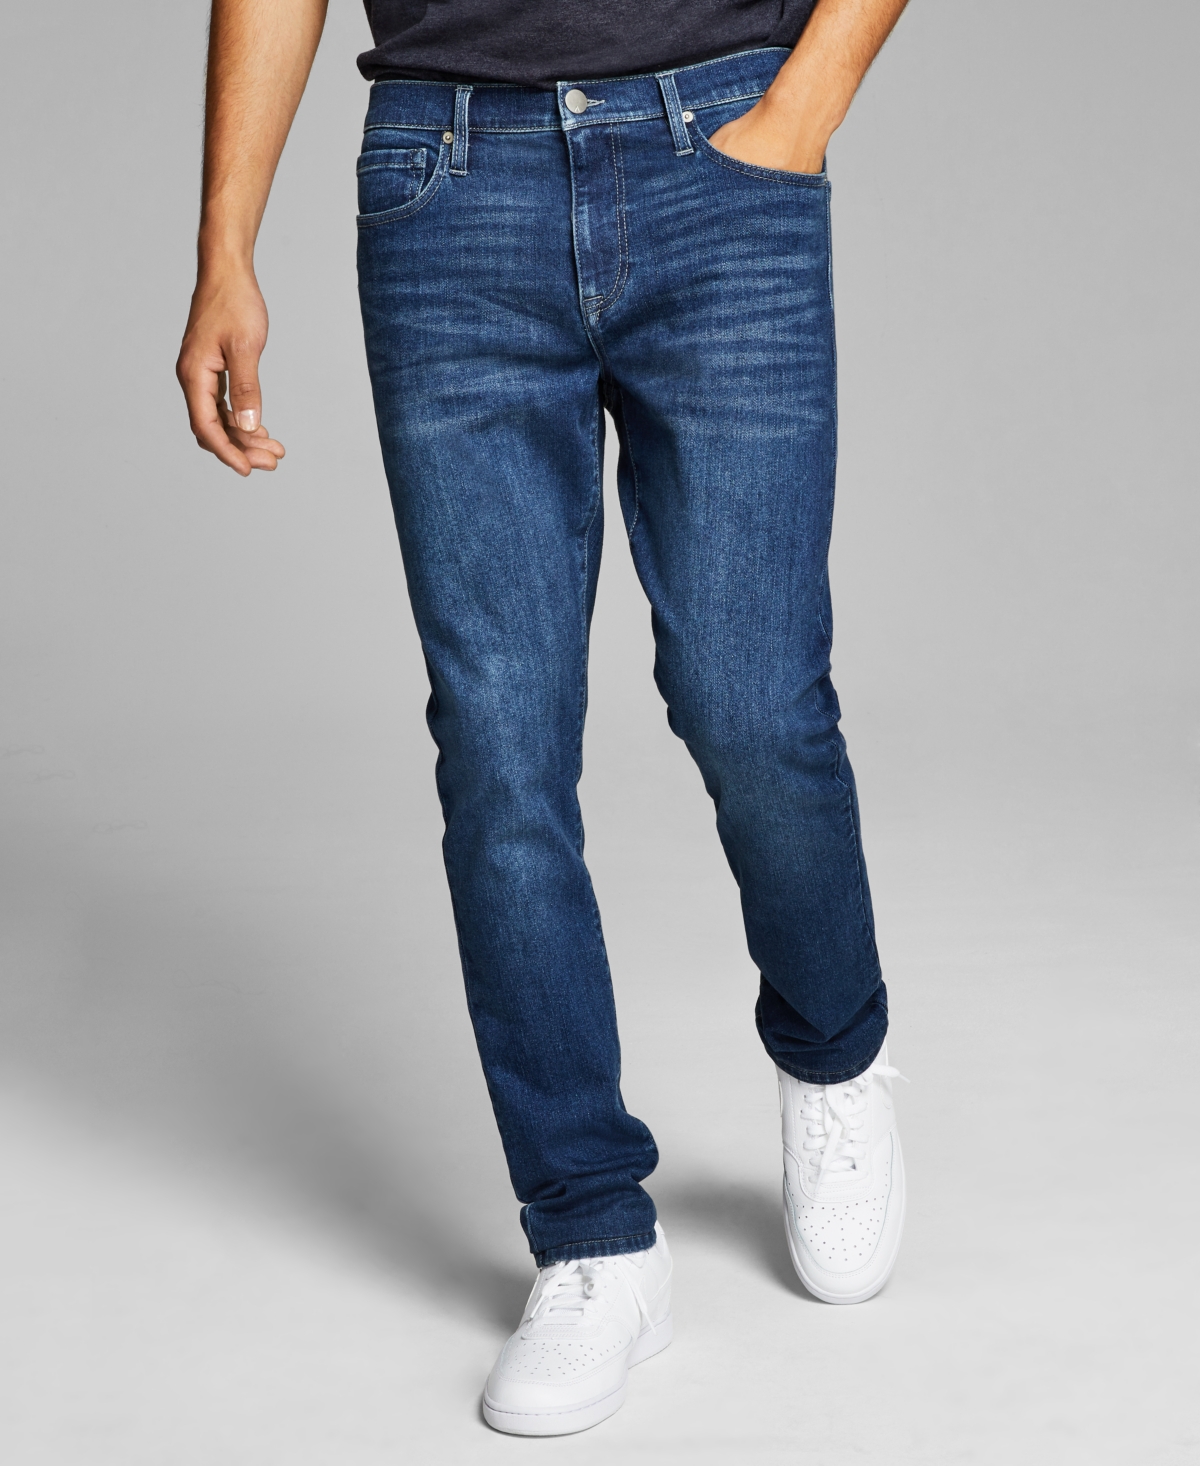 Men's Skinny-Fit Stretch Jeans - Overdye Dark Blue Wash